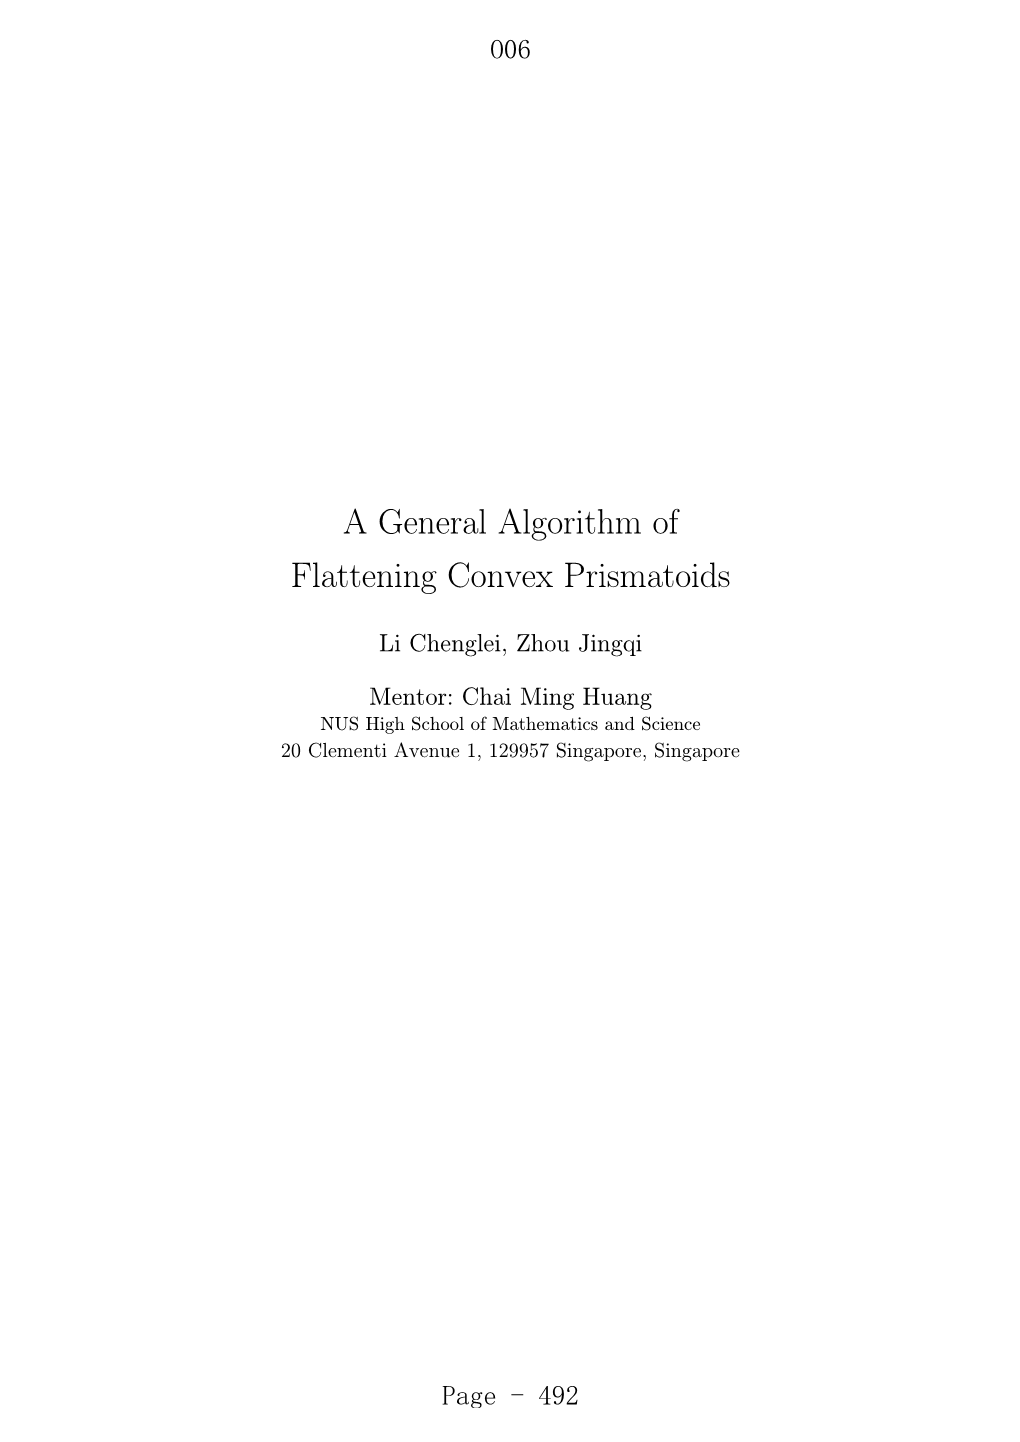 A General Algorithm of Flattening Convex Prismatoids